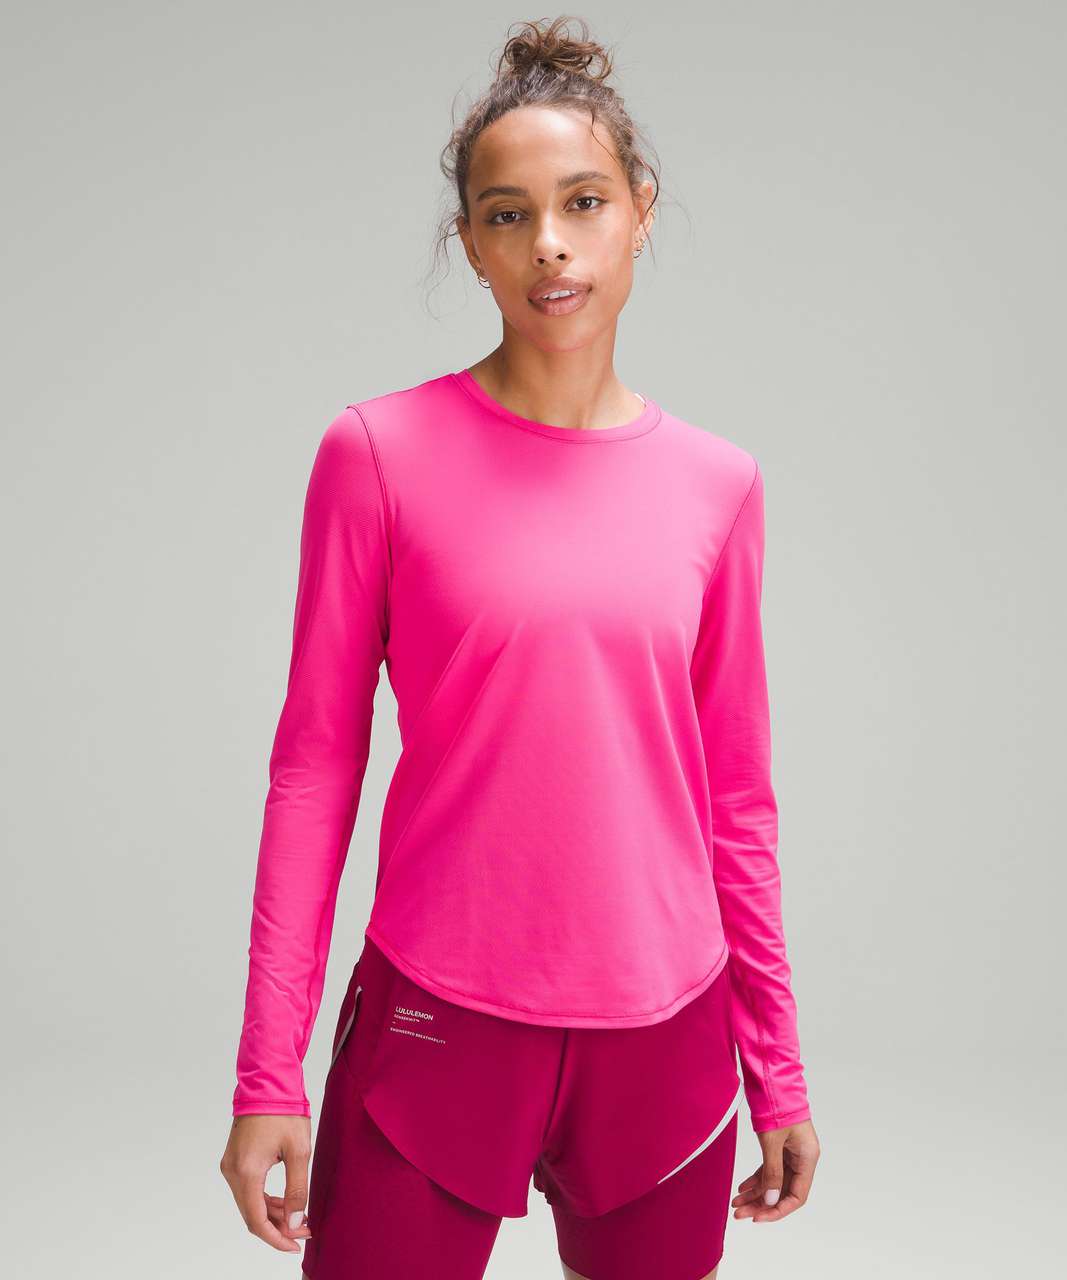 Lululemon High-Neck Running and Training Long-Sleeve Shirt - Sonic Pink